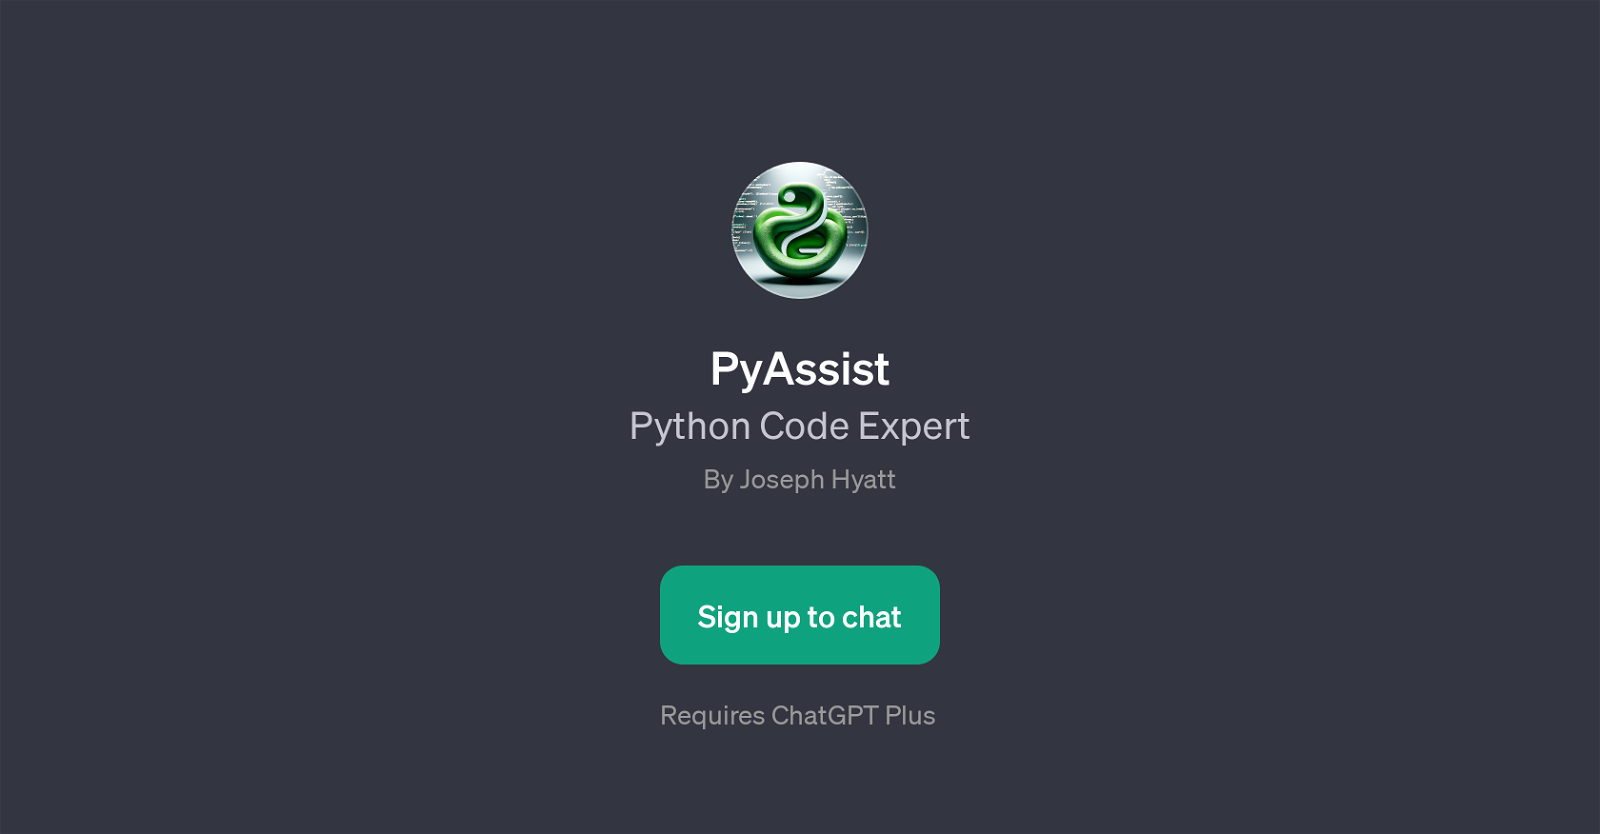 PyAssist website